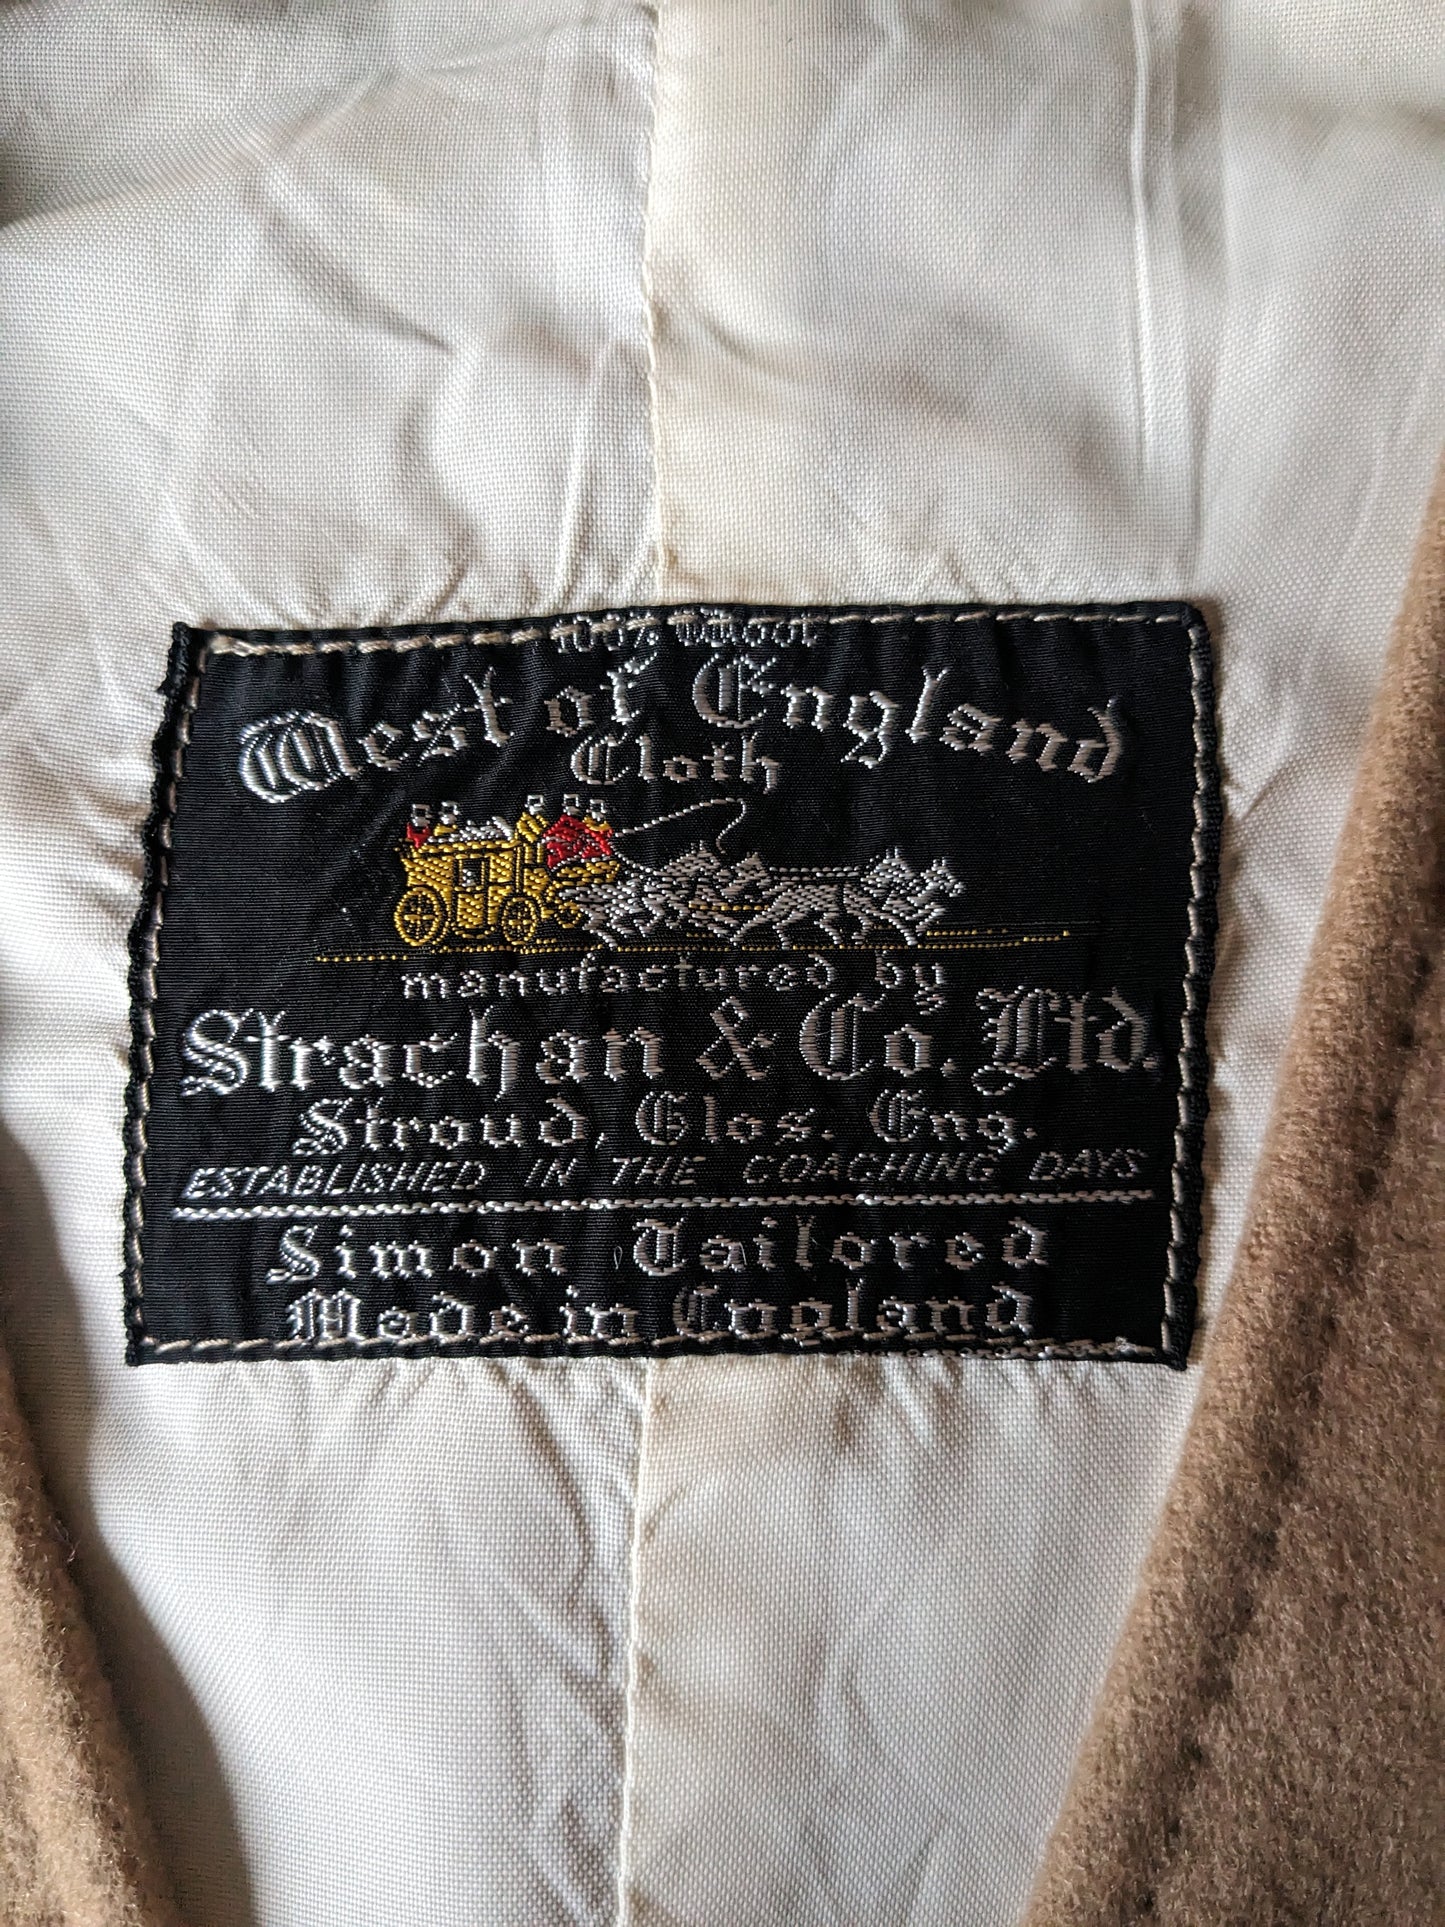 Strachan & Co Ltd Woolen Gilet. Camel Brown de color. Tamaño xl.